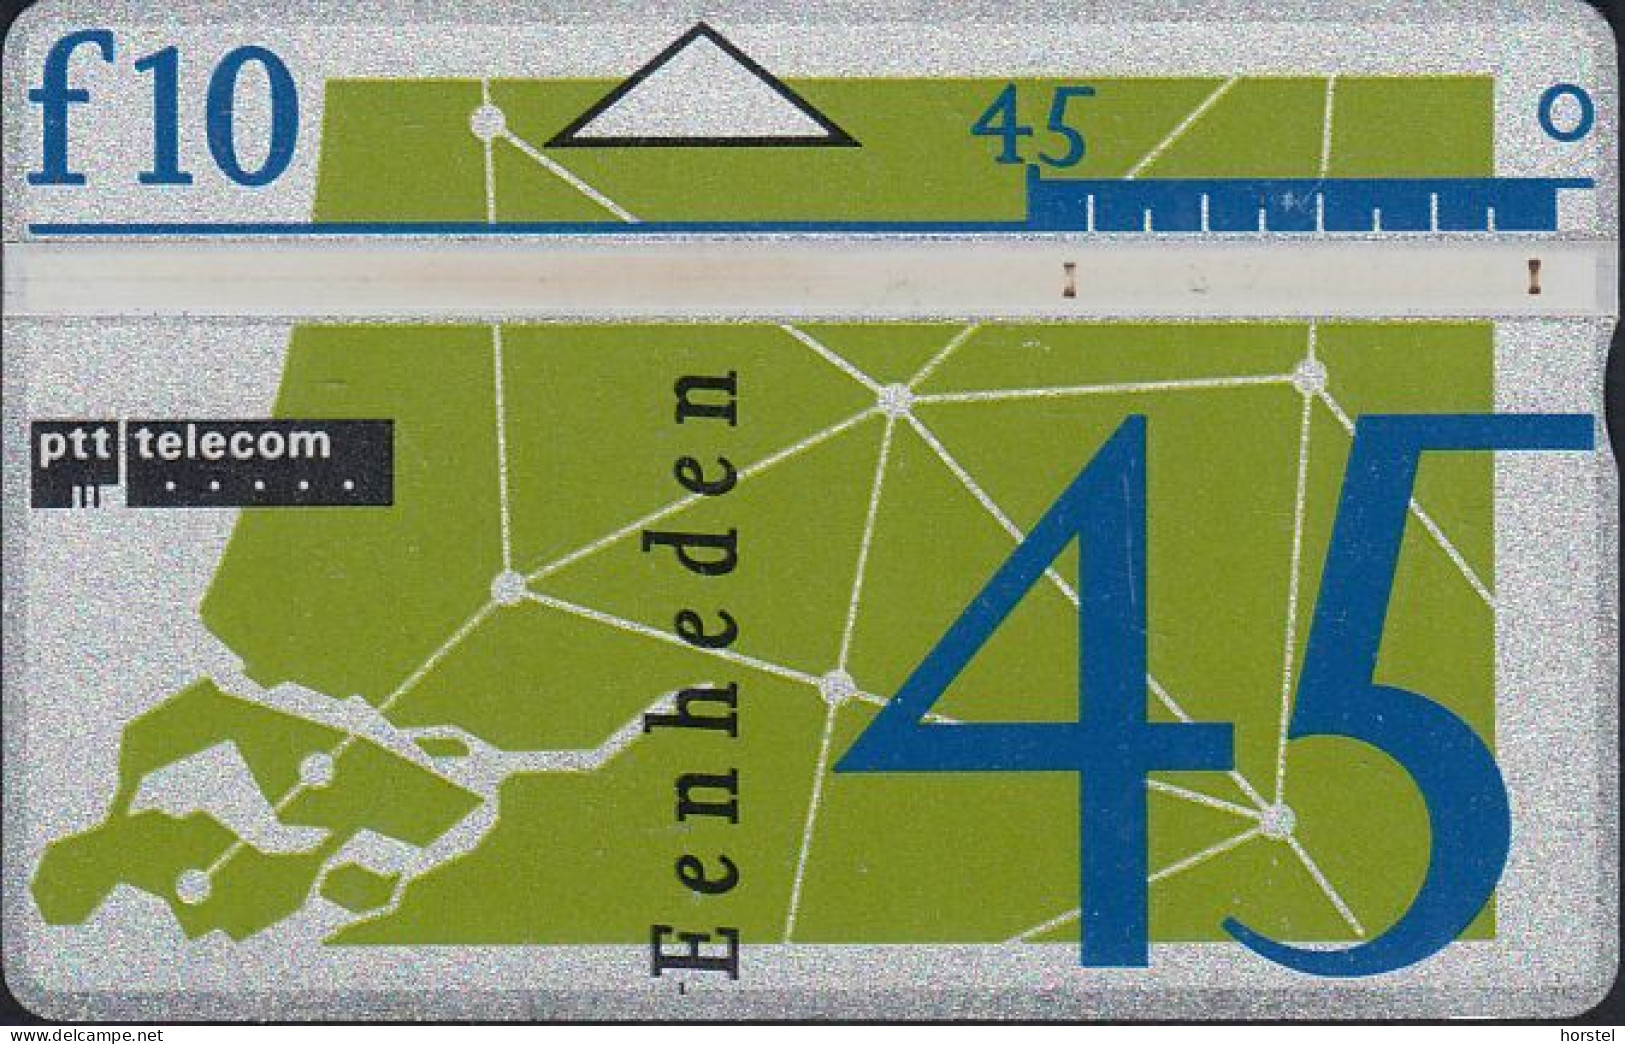 Netherland - L&G 1991 7.Standard Serie - D019B - (110B) Network - öffentlich